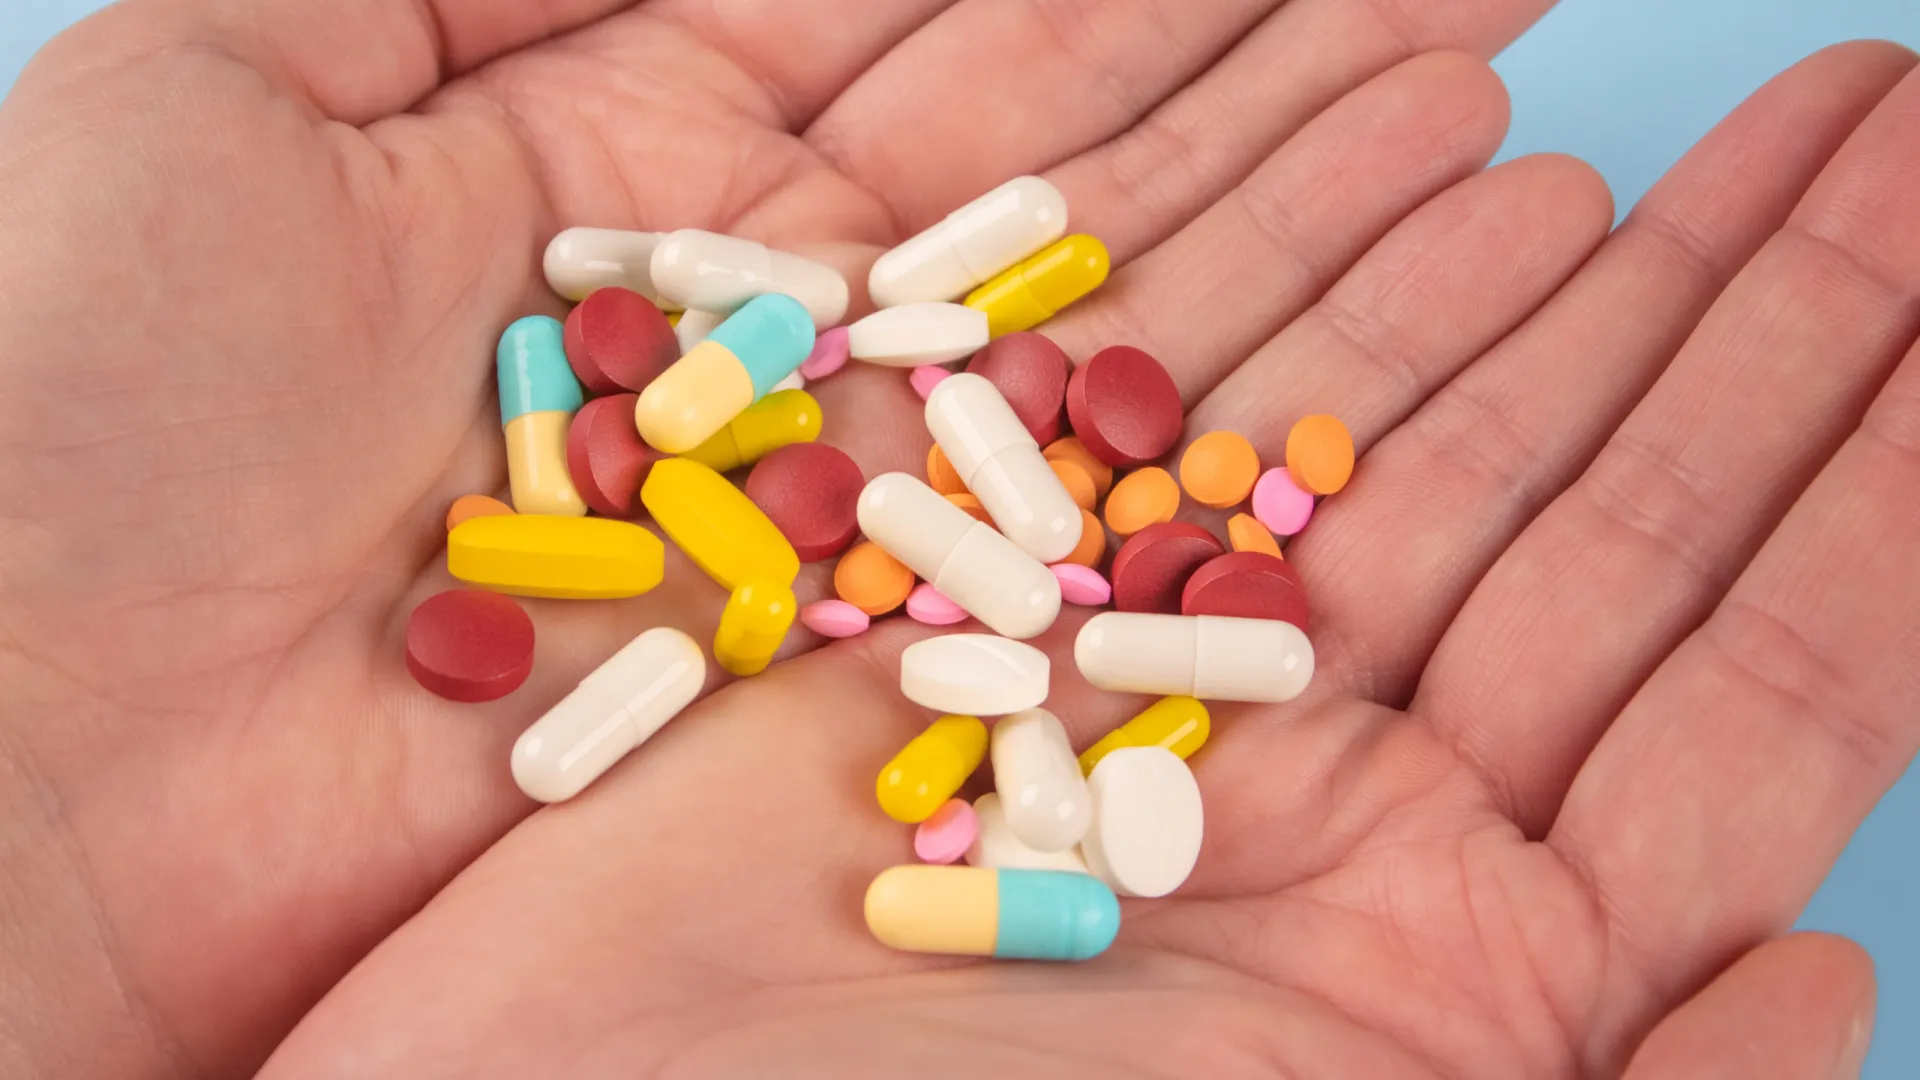 Специалисты предупреждают о вреде самолечения антибиотиками. Фото: Iryna Mylinska / Shutterstock/Fotodom